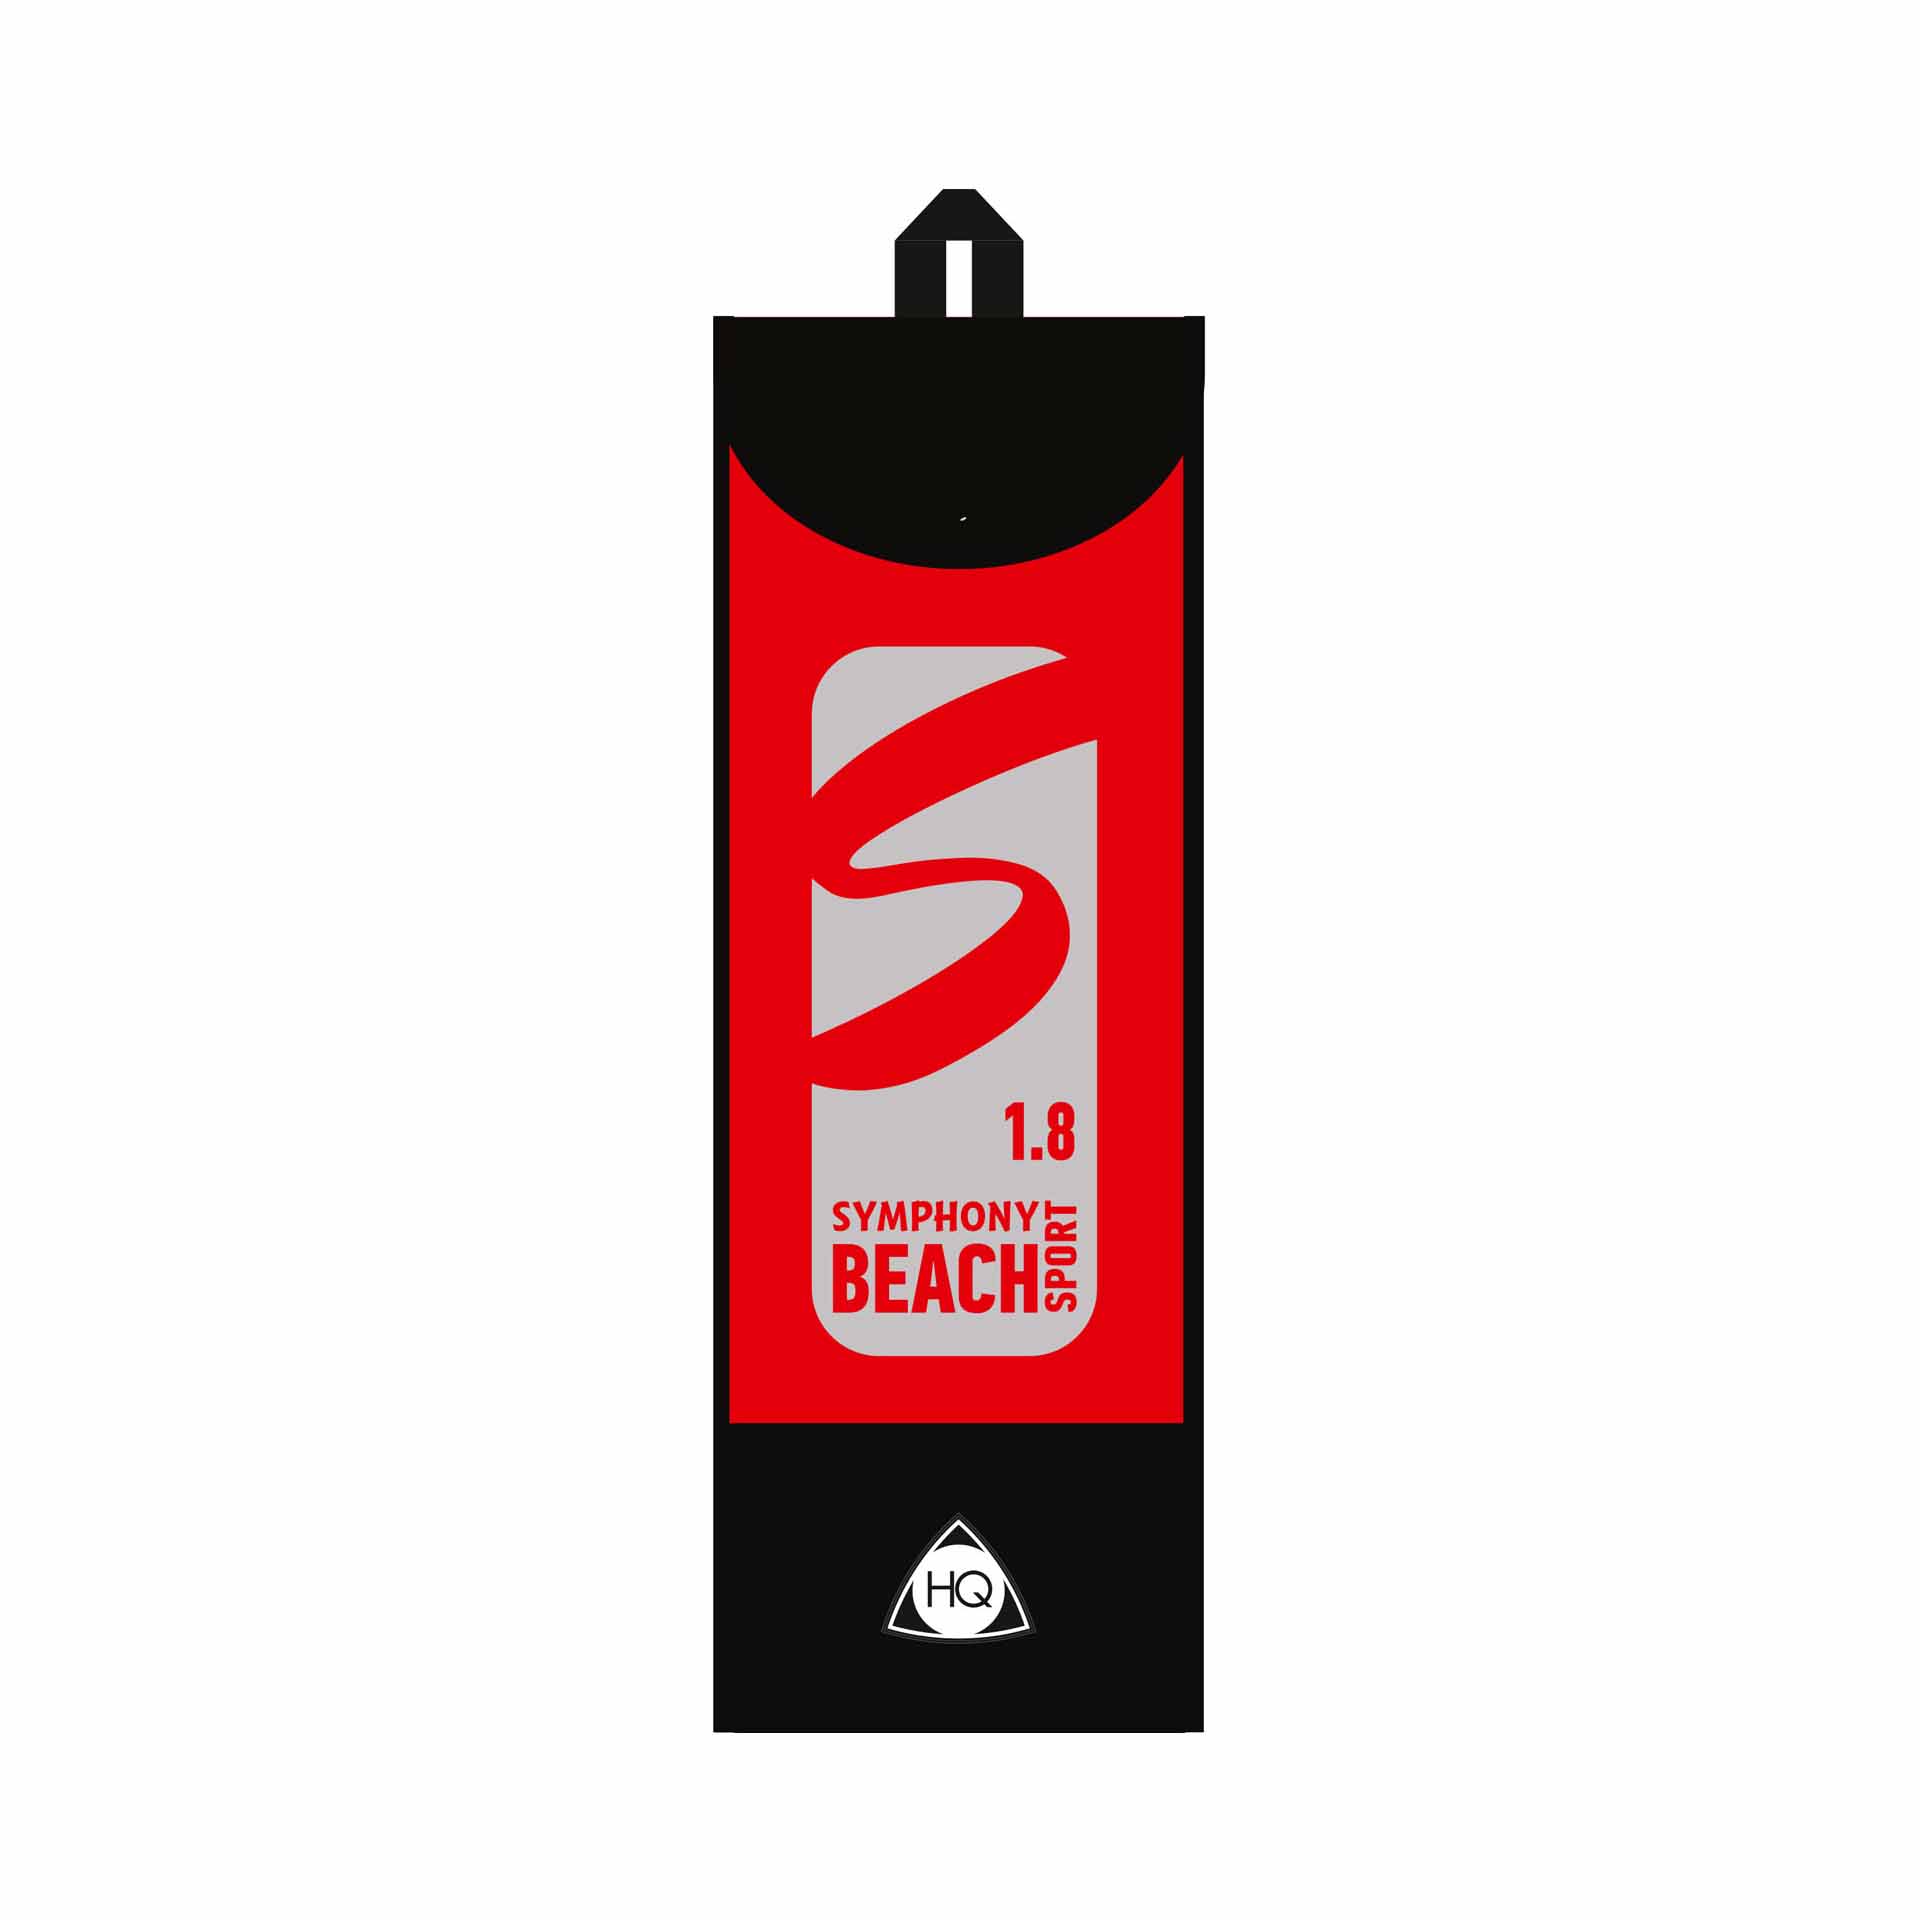 HQ Symphony Beach III 1.8 Sport - Tasche - 01